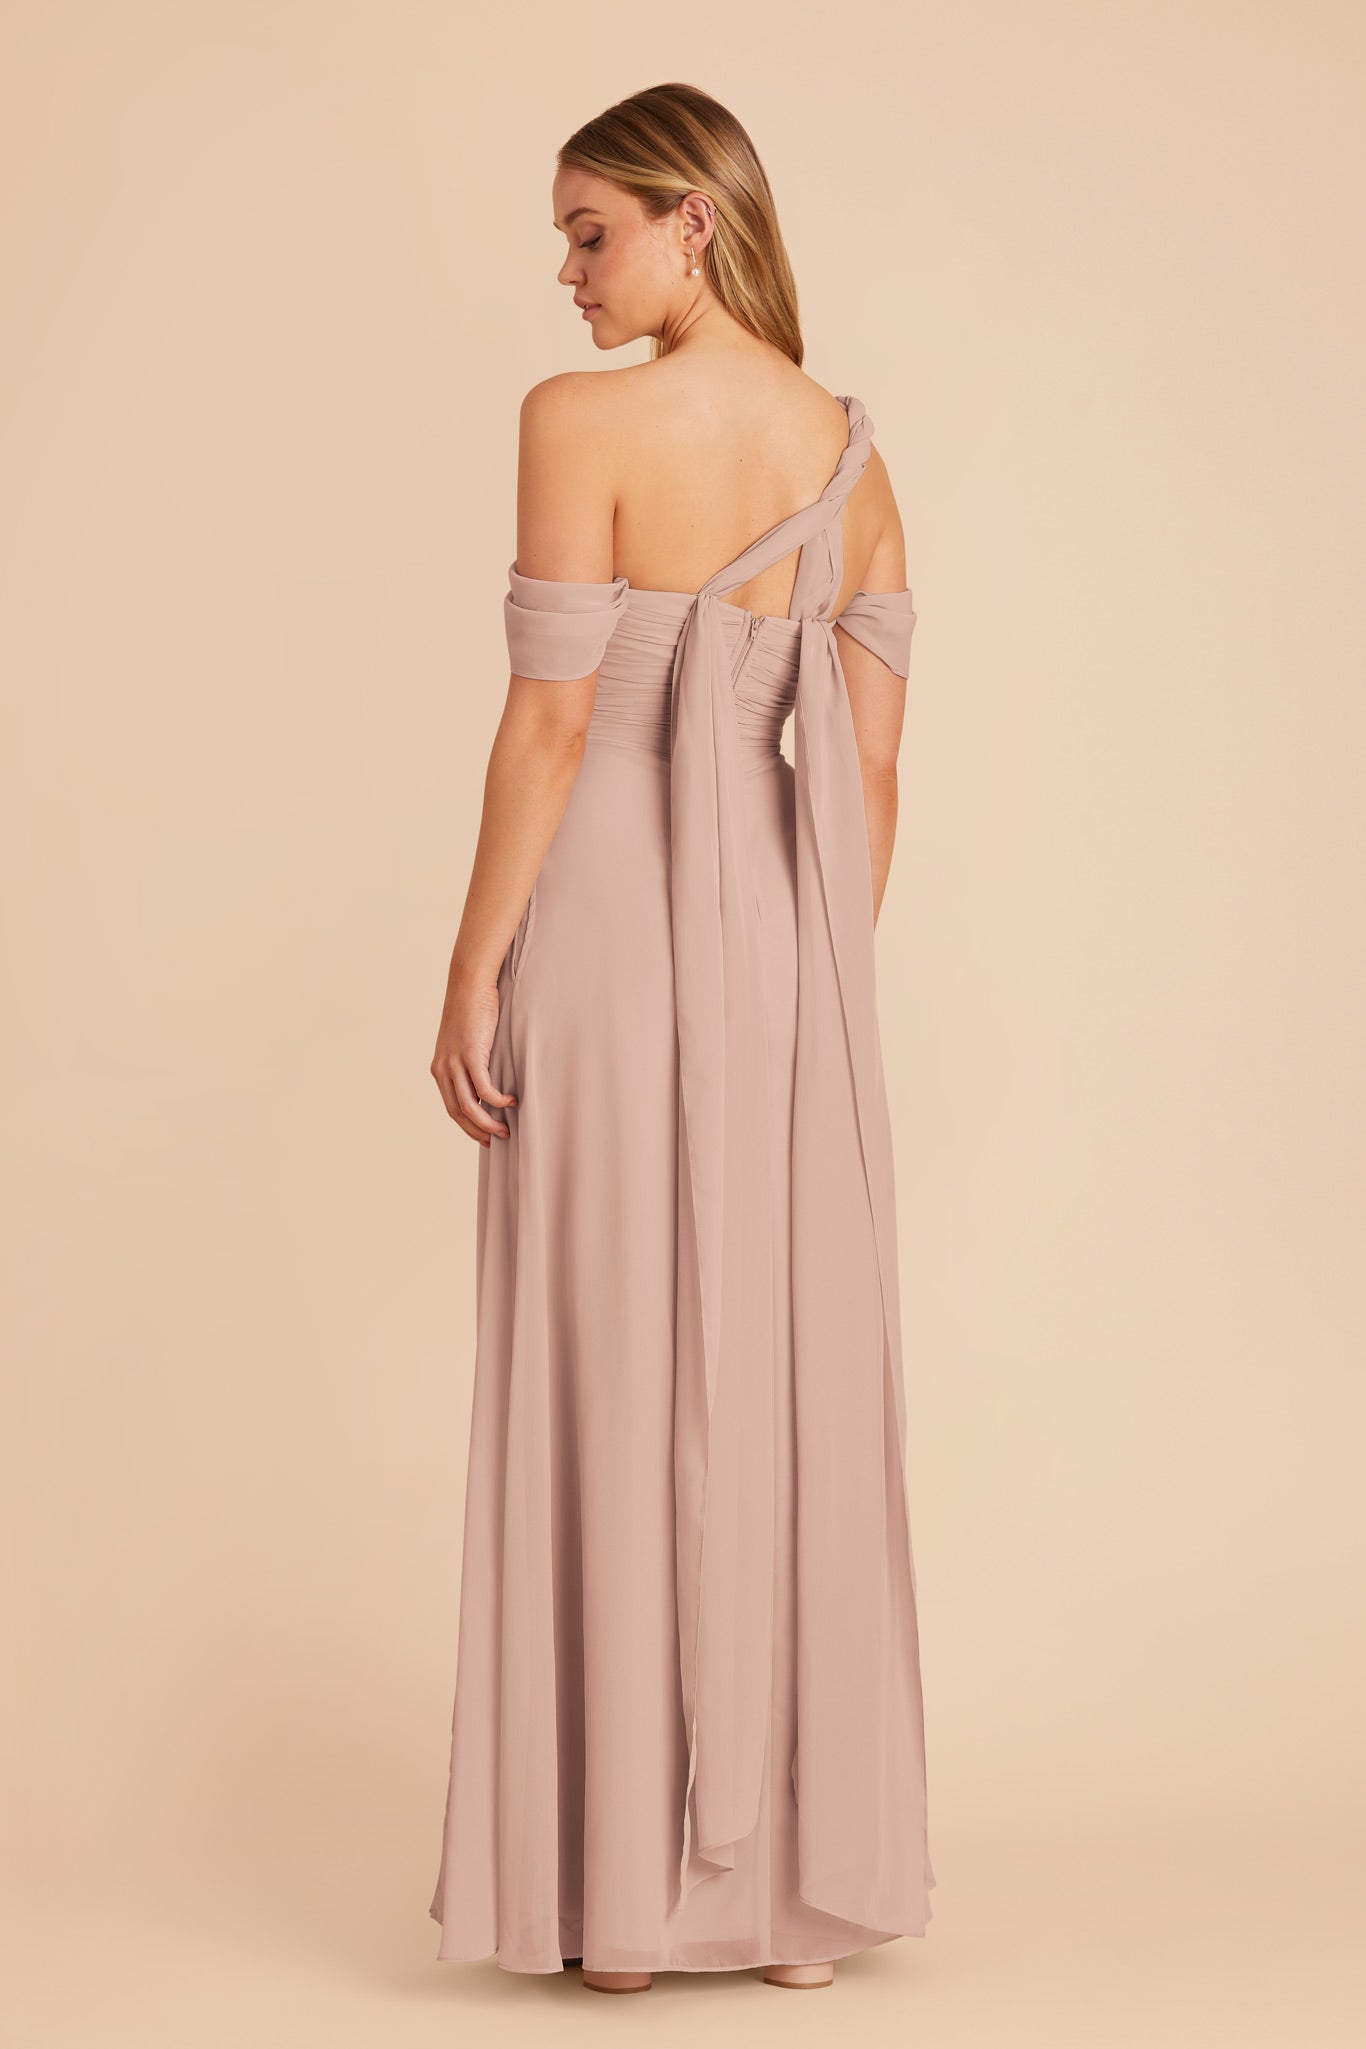 Taupe Cara Chiffon Dress by Birdy Grey